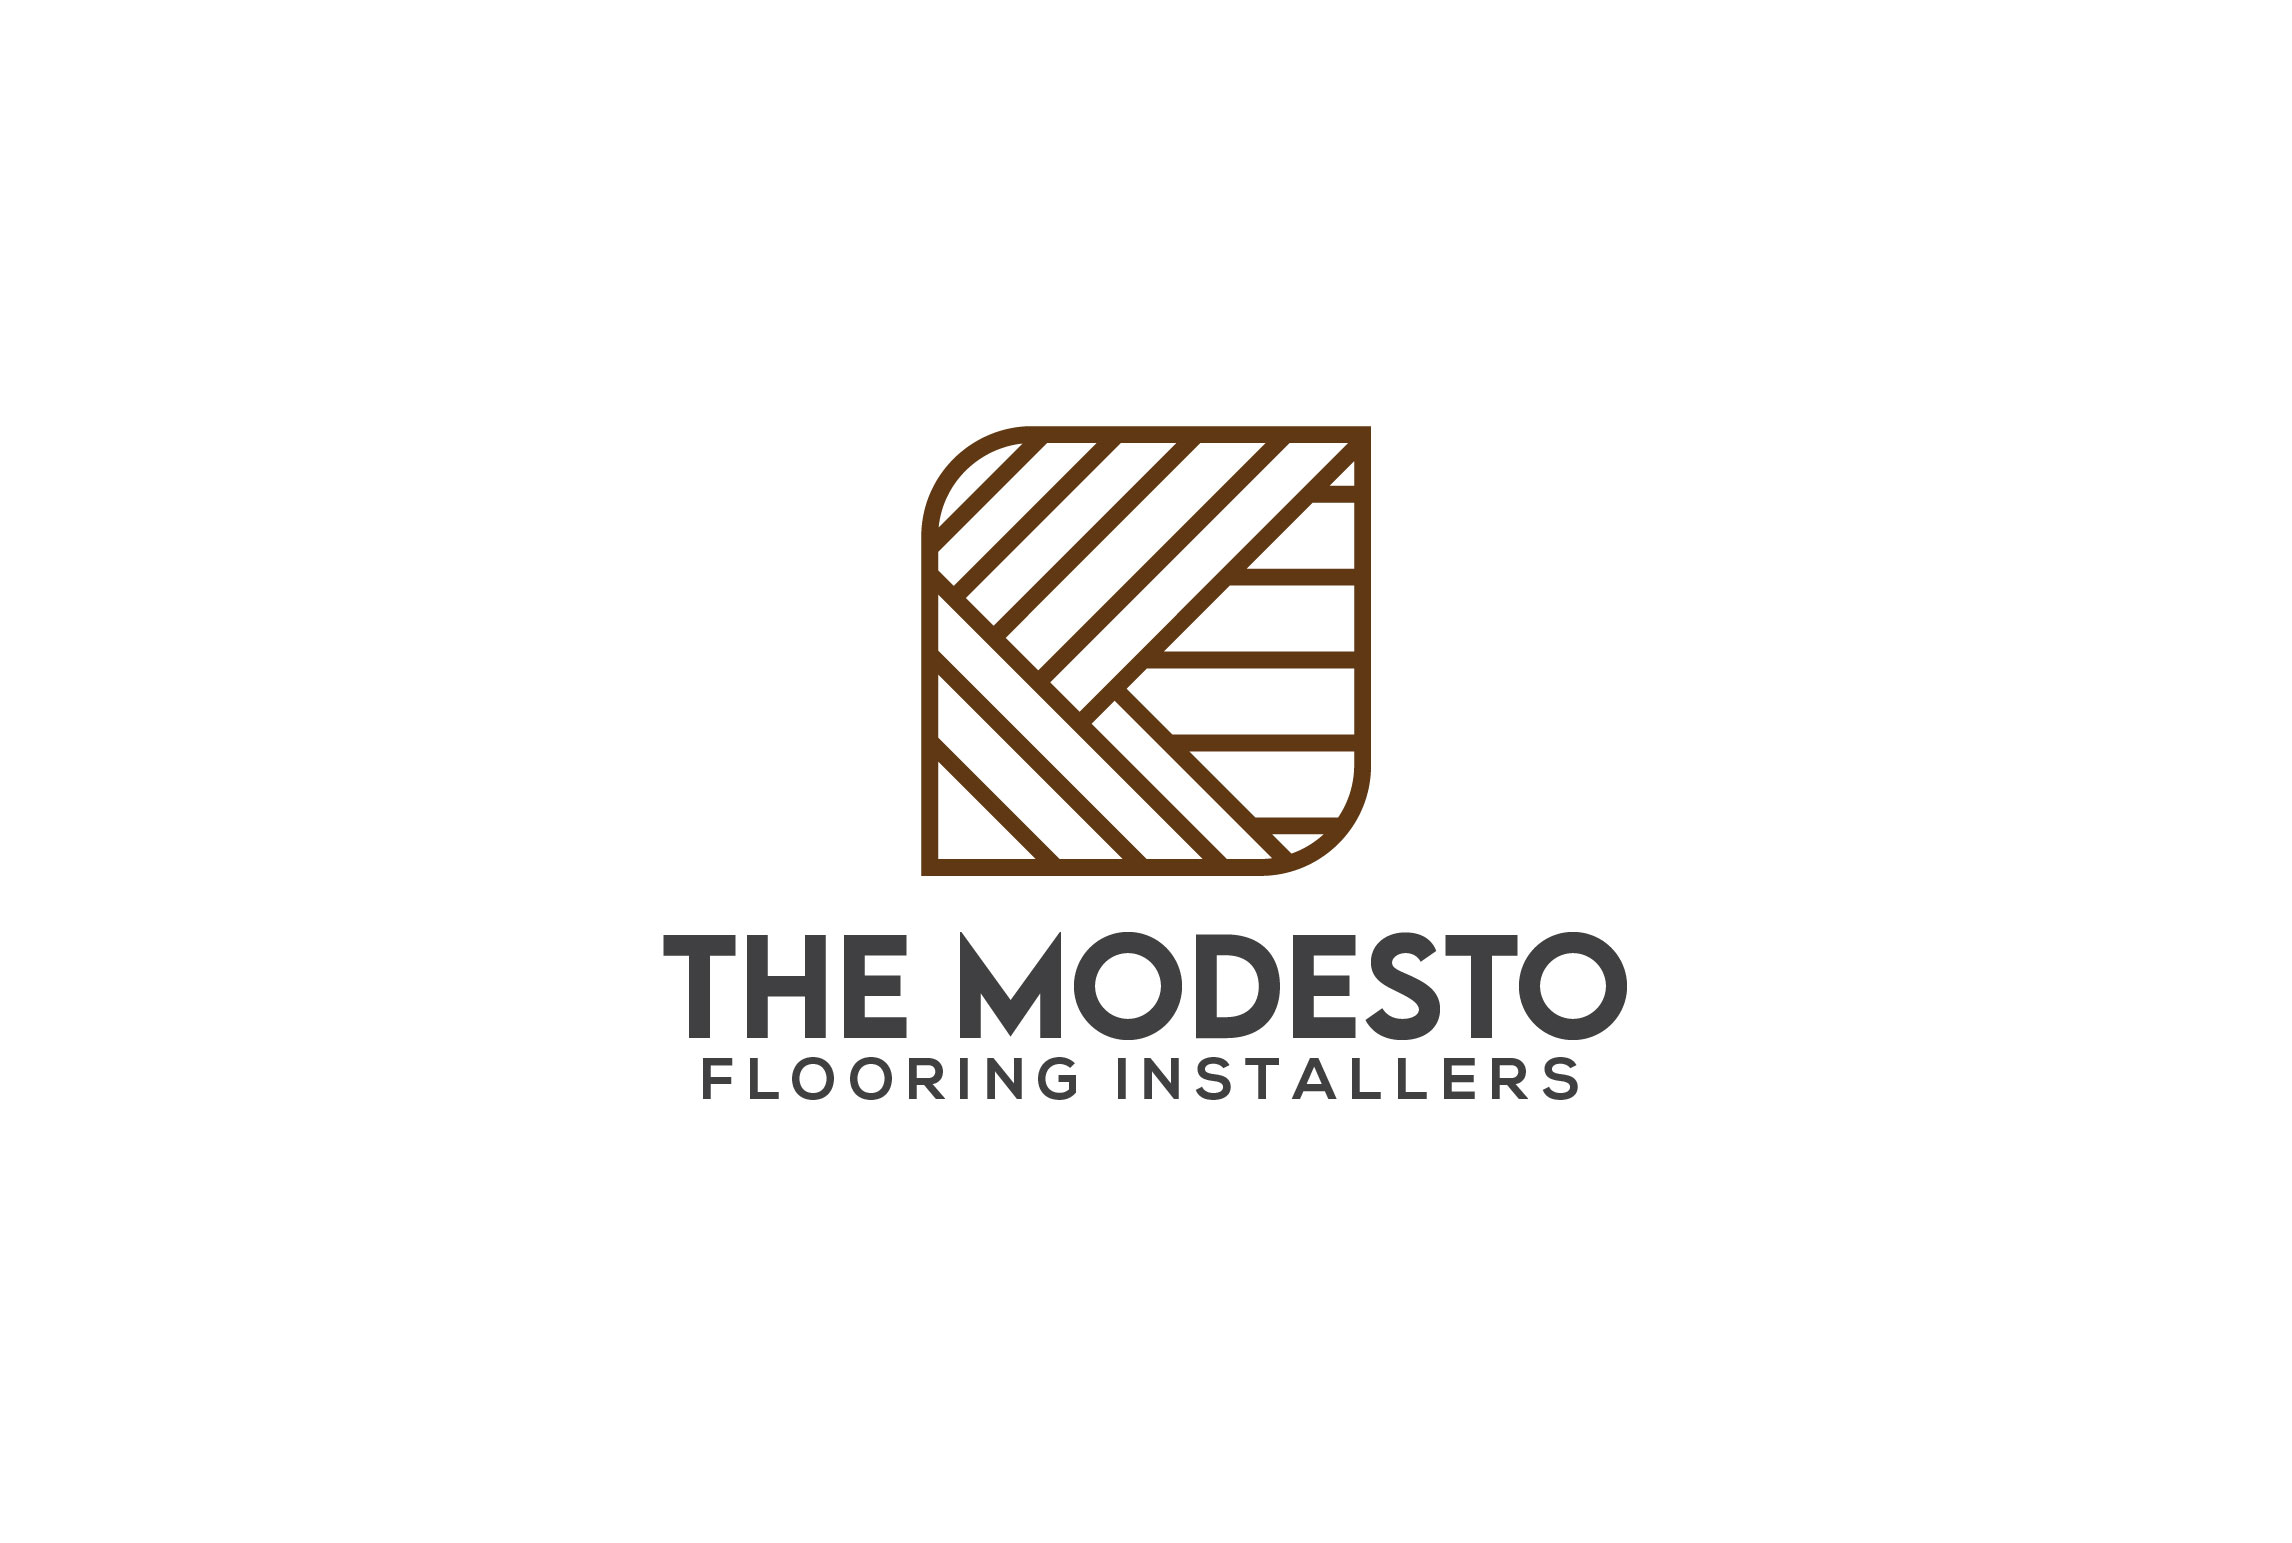 The Modesto Flooring Installers